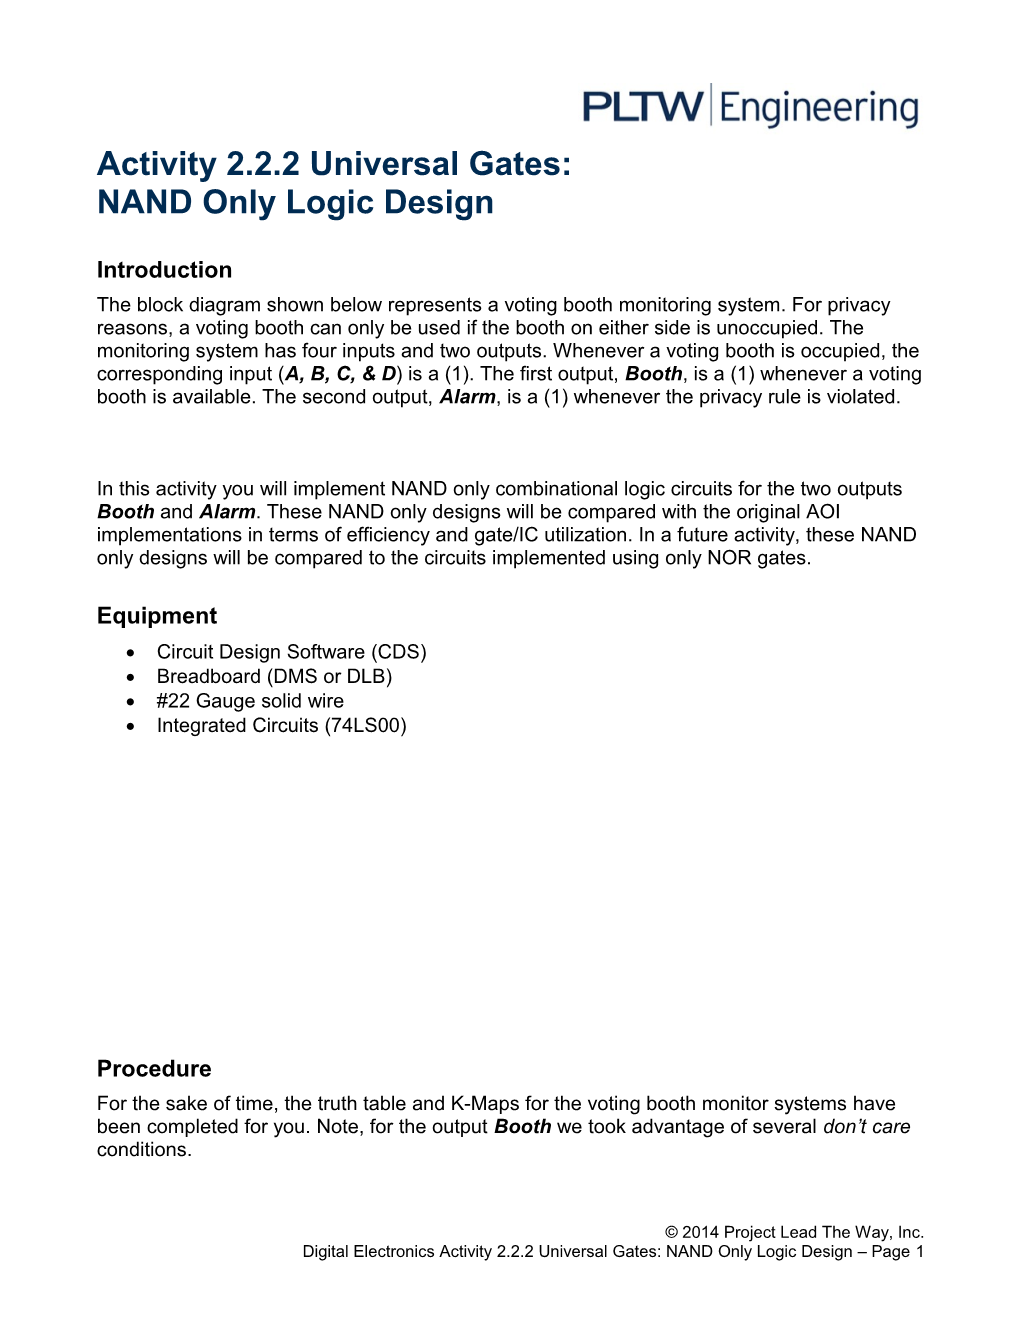 Activity 2.2.2 NAND Logic Design